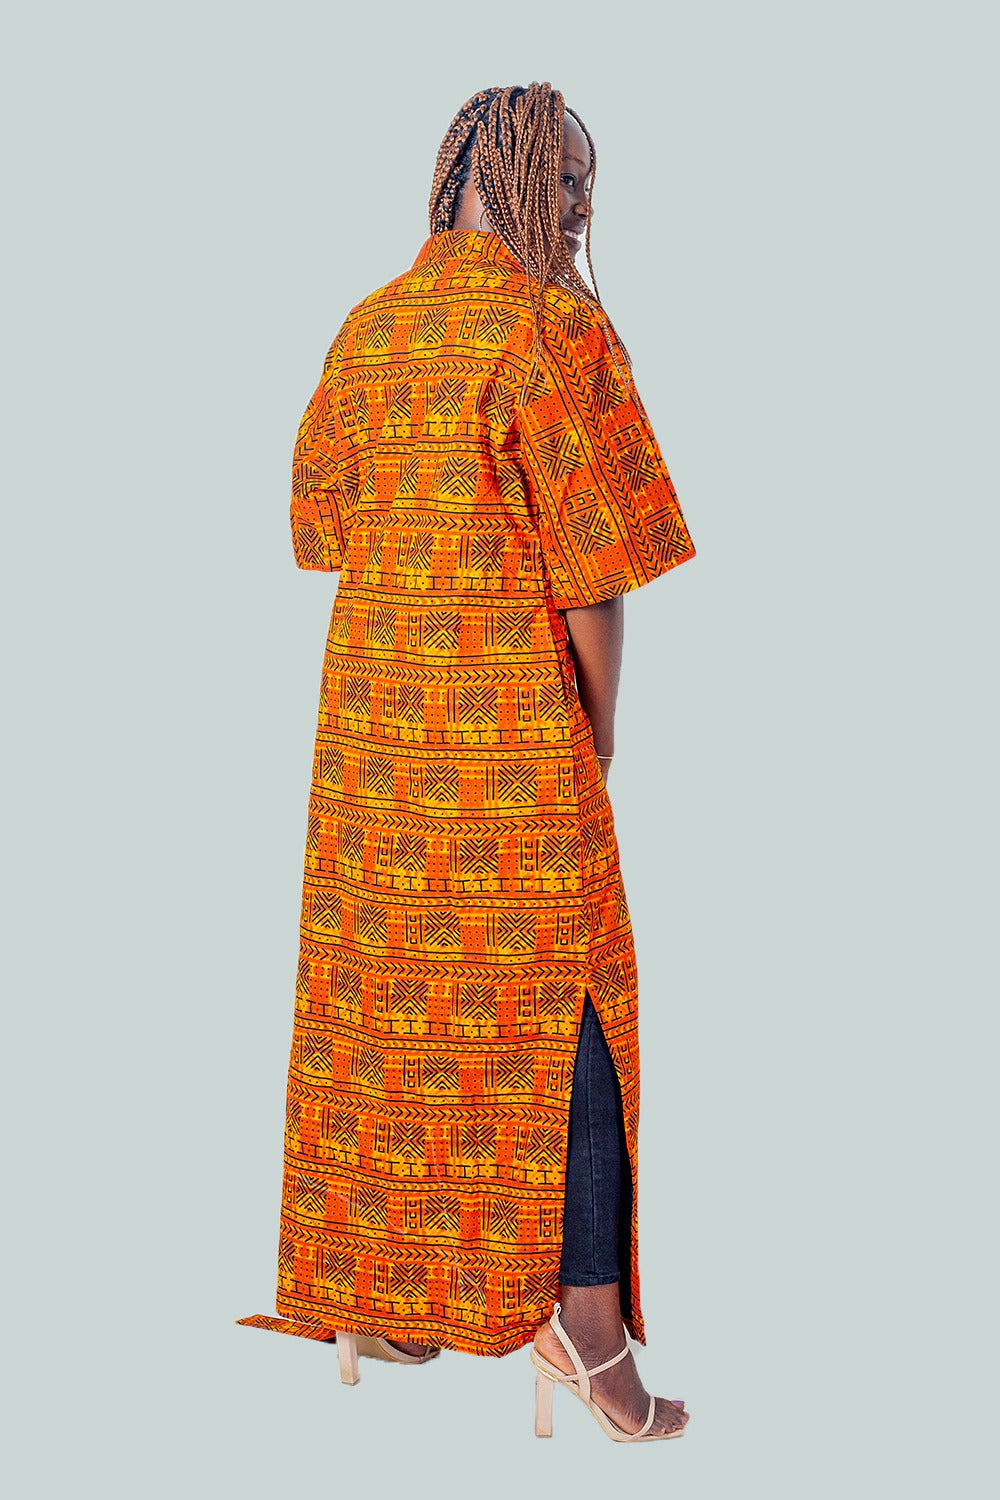 Ola African Prints Duster Jacket